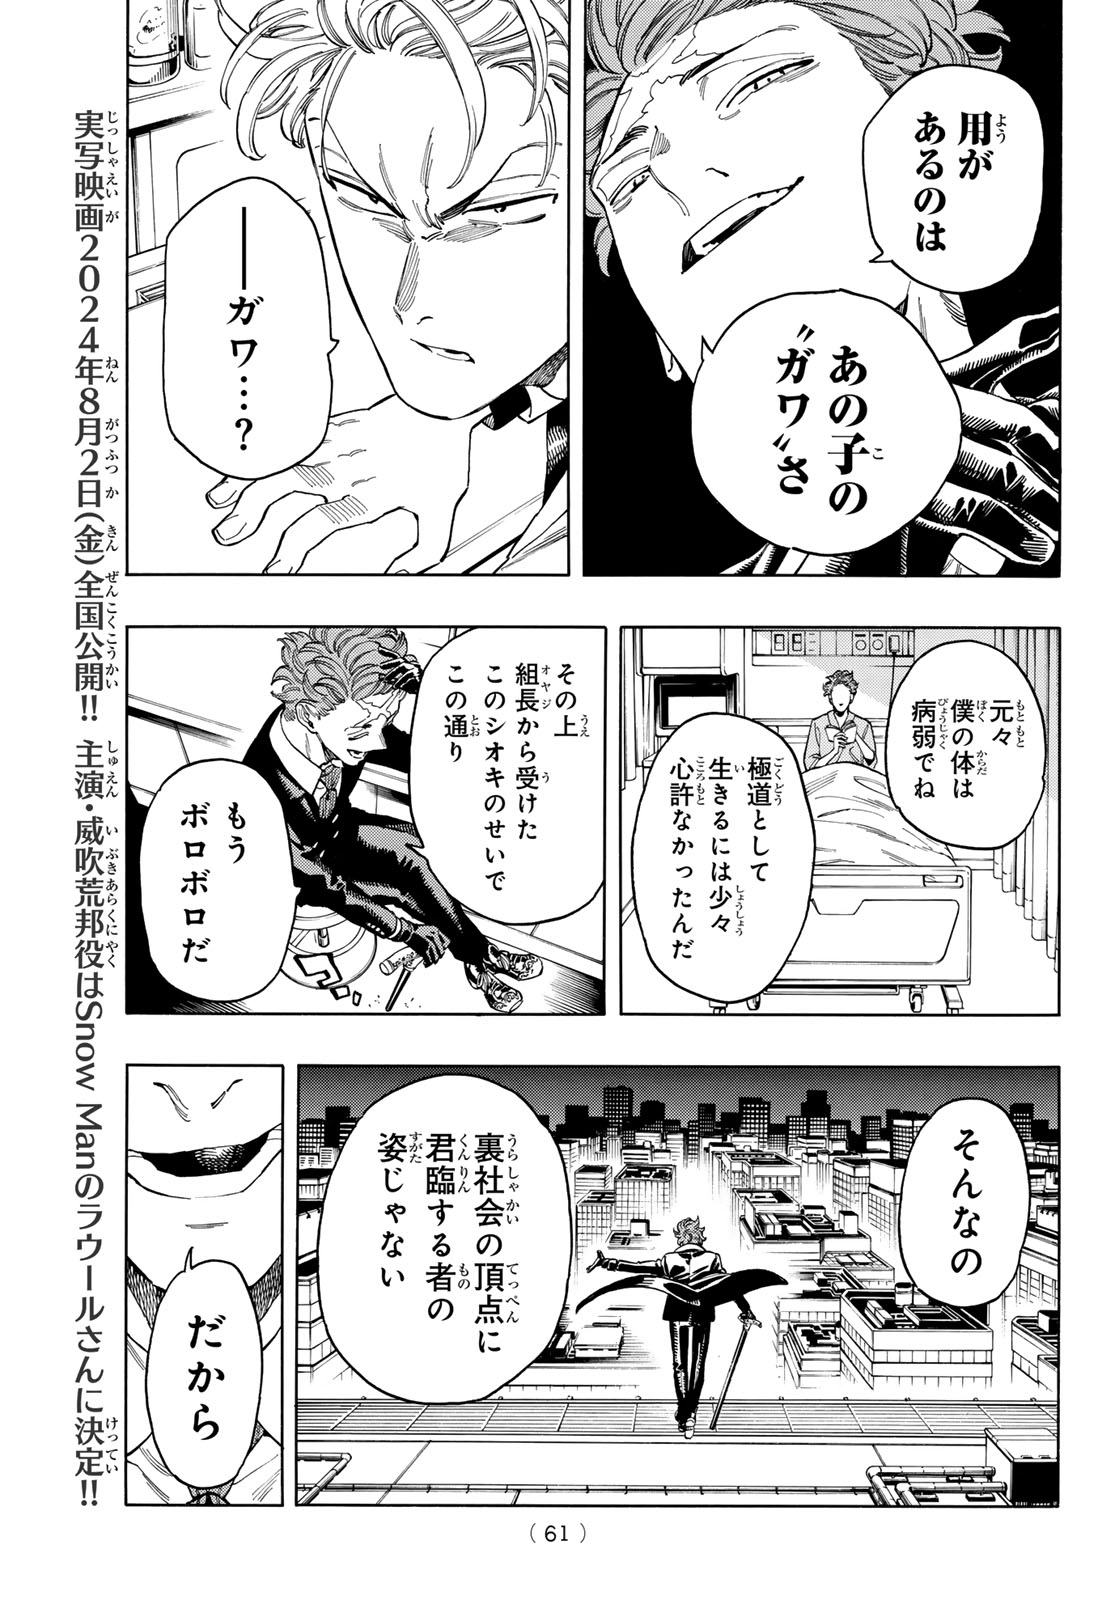 Akabane Honeko no Bodyguard - Chapter 85 - Page 3